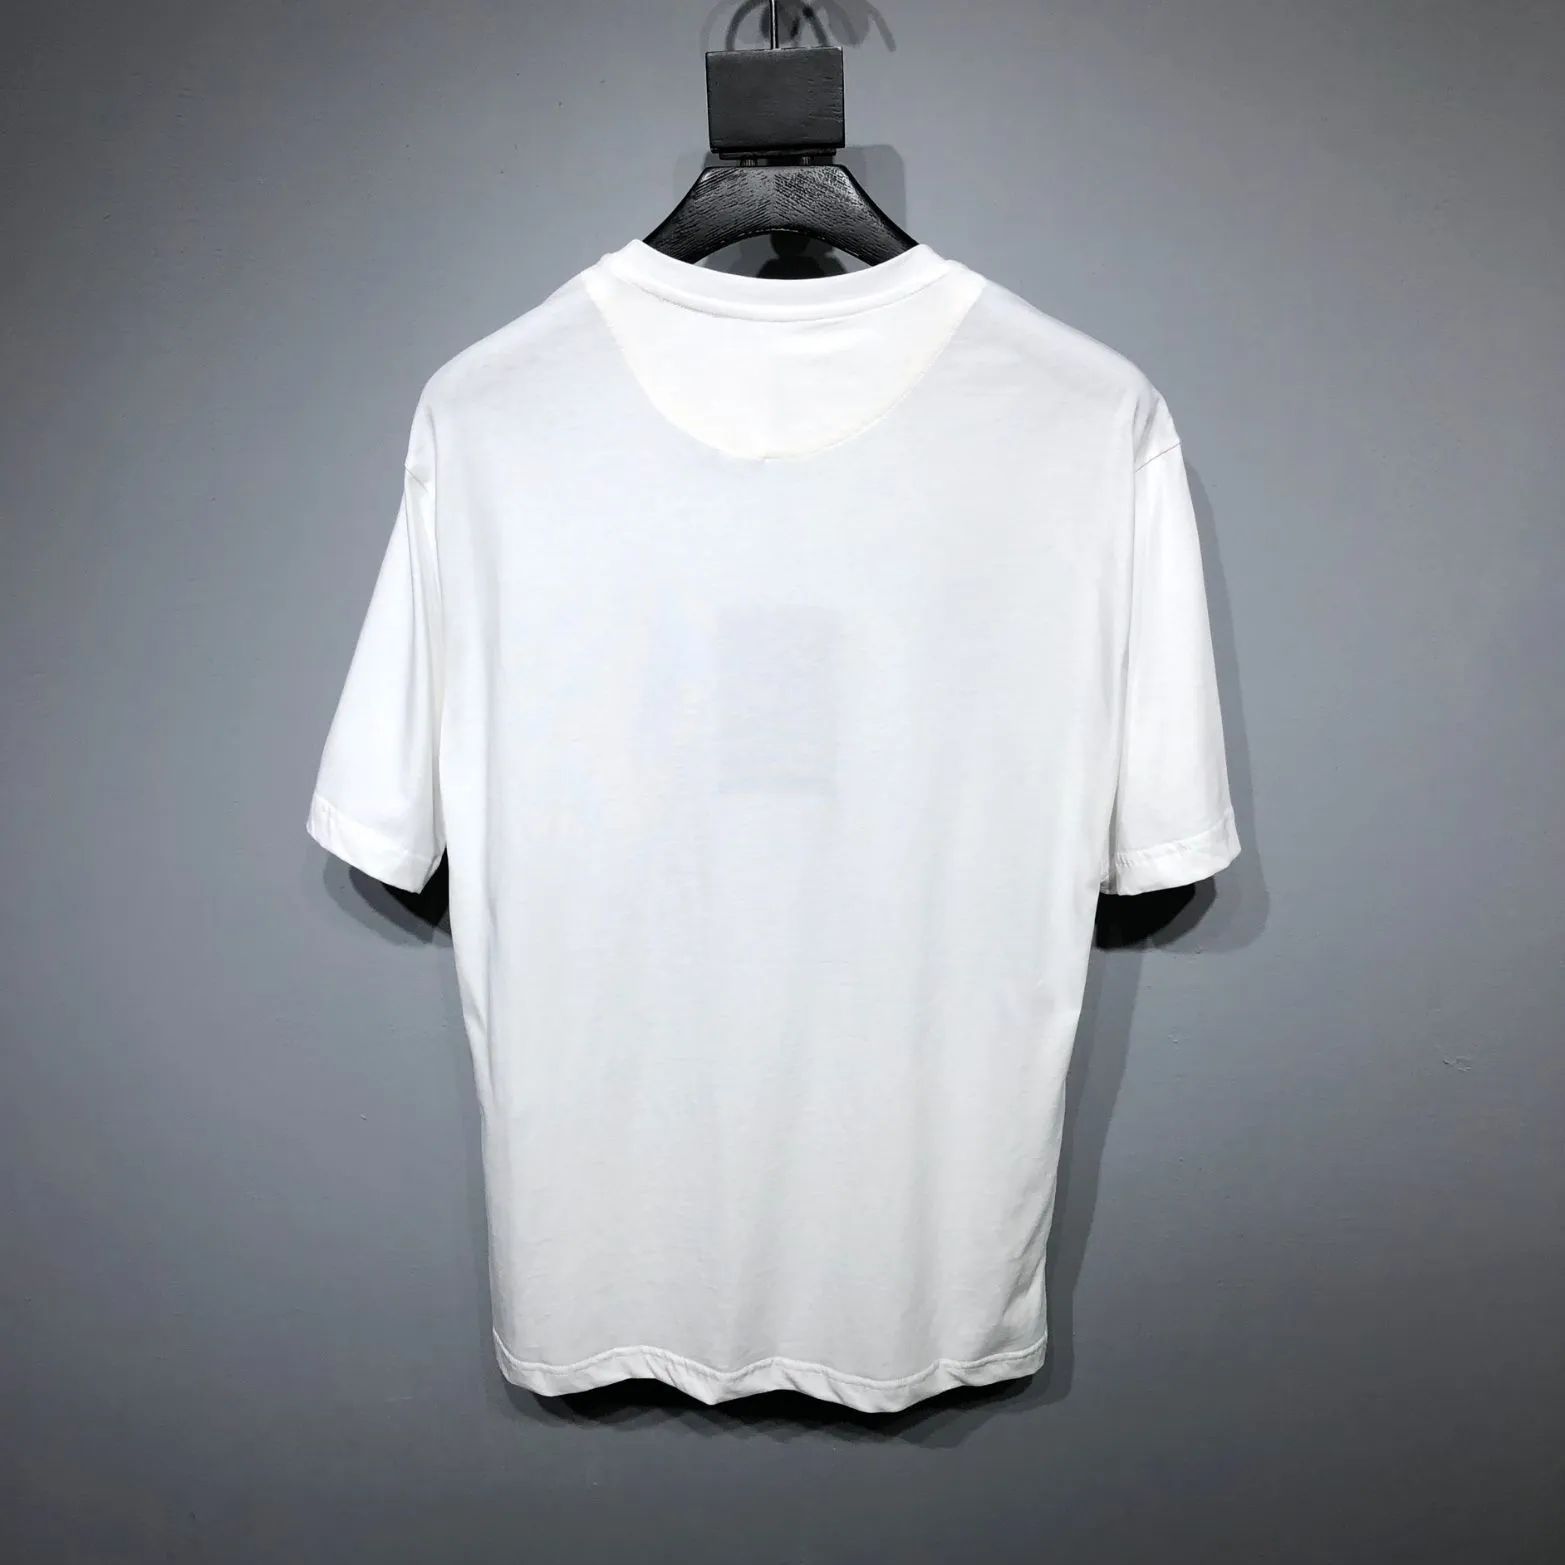 Prada プラダ 三角ロゴ メンズ レディース 半袖Tシャツ ホワイト M